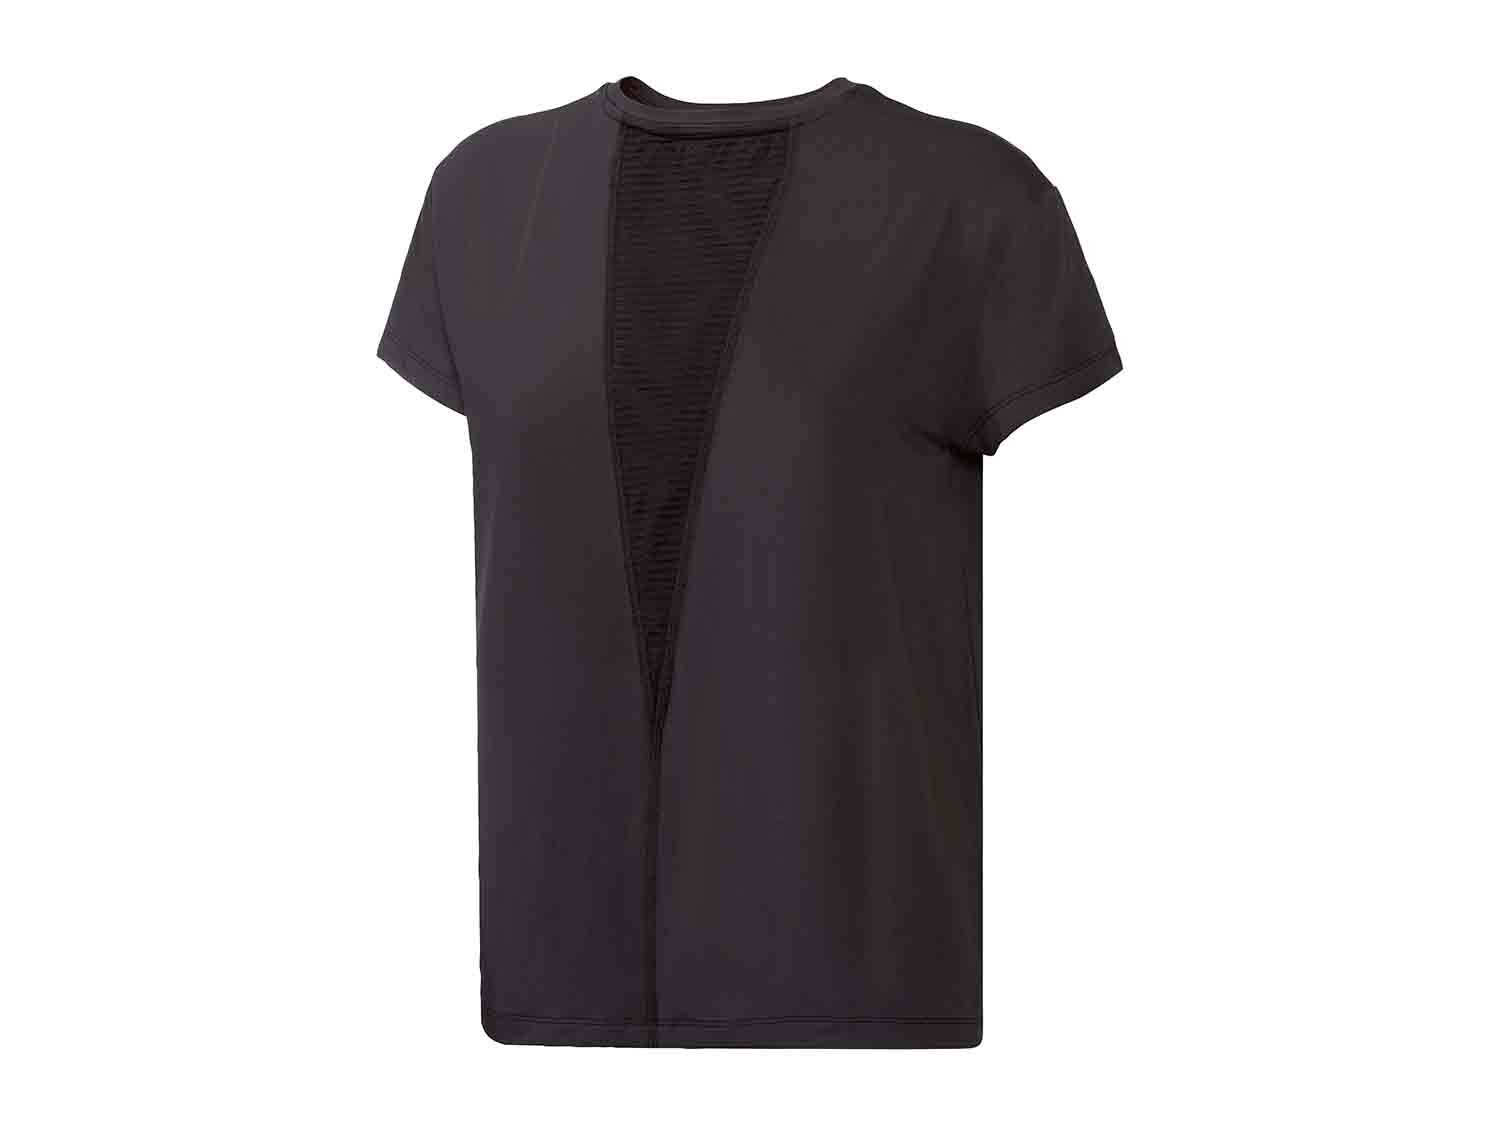 Camiseta técnica negra de manga corta para mujer